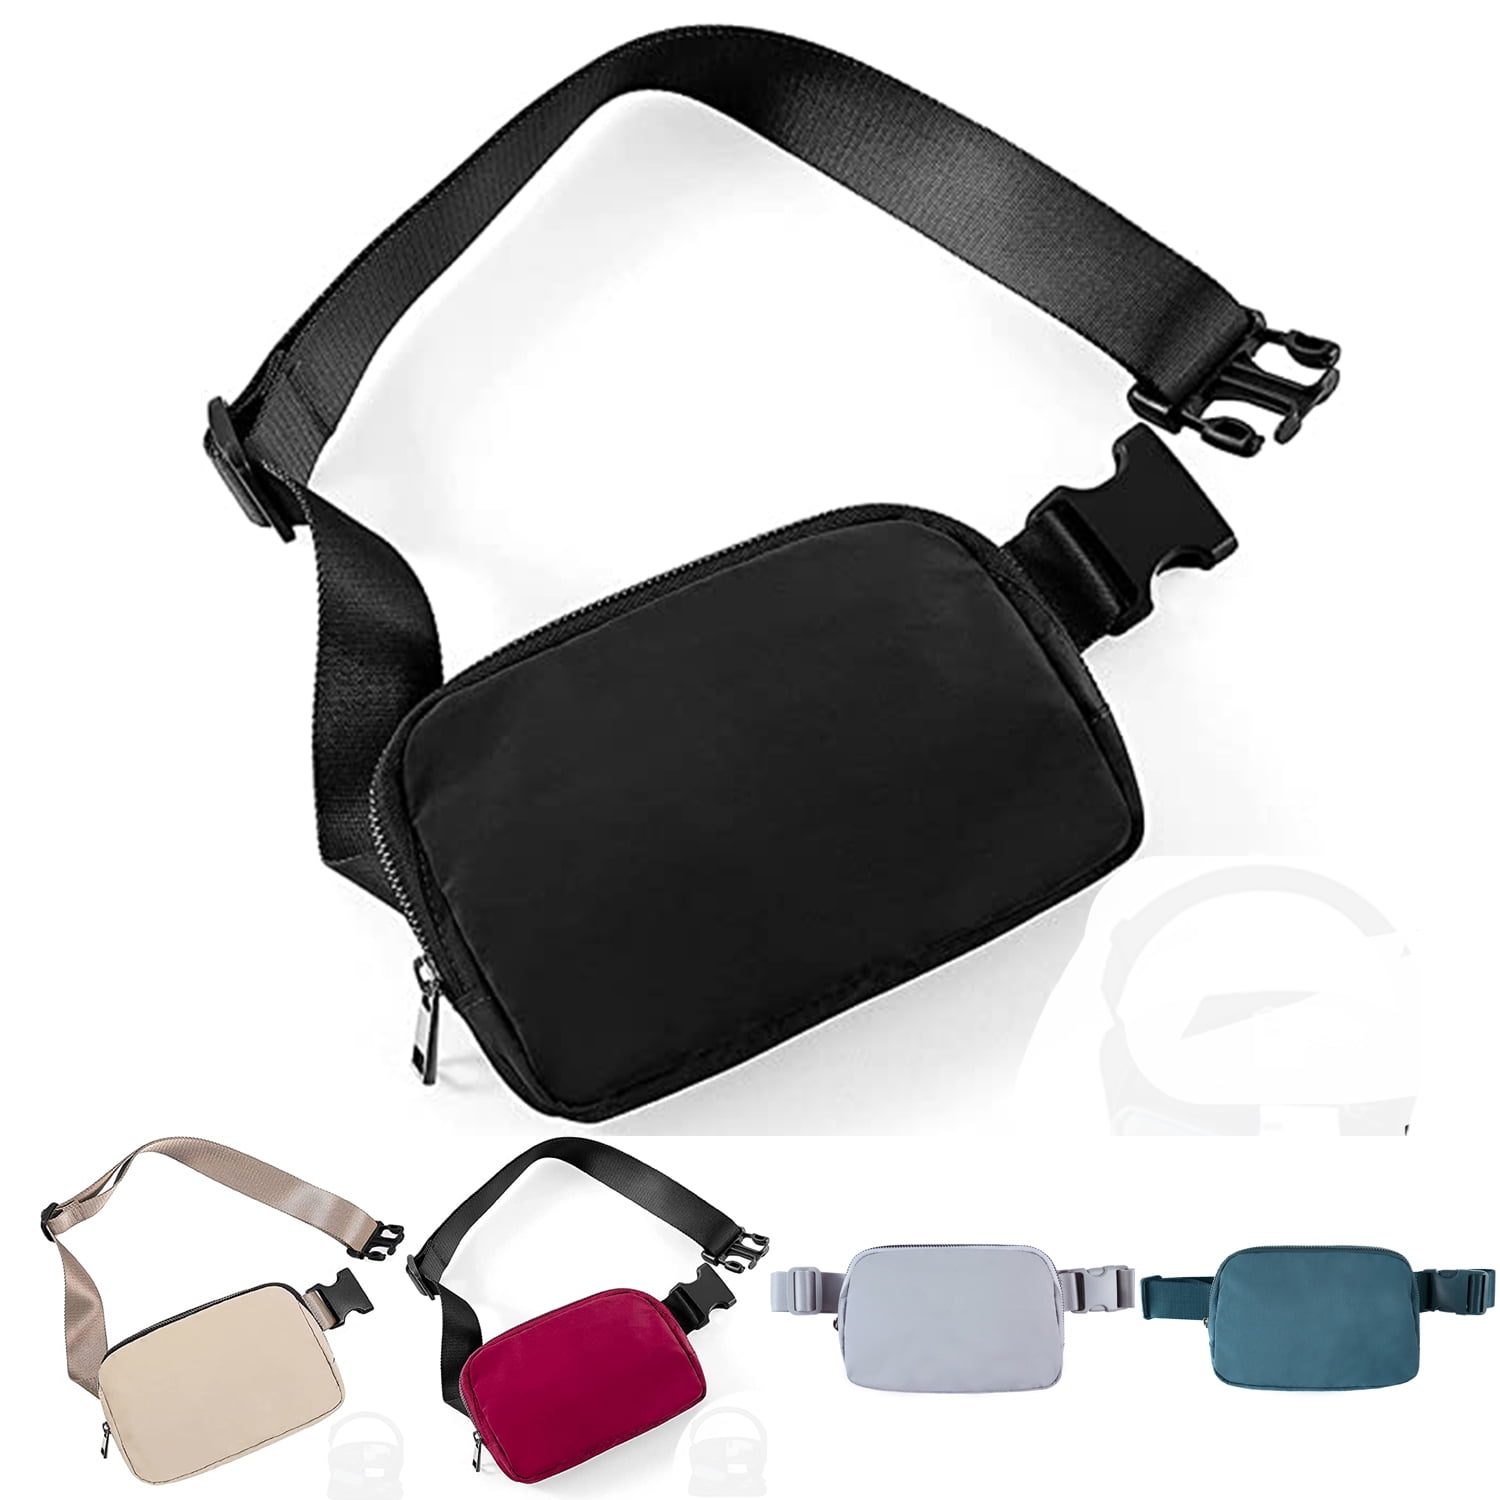 Unisex Fanny Pack Belt Bag for Women Men, Designer Fashion Waist Pack  Small, Adjustable Waist Band for Travel, Hiking, Sports (Ivory)